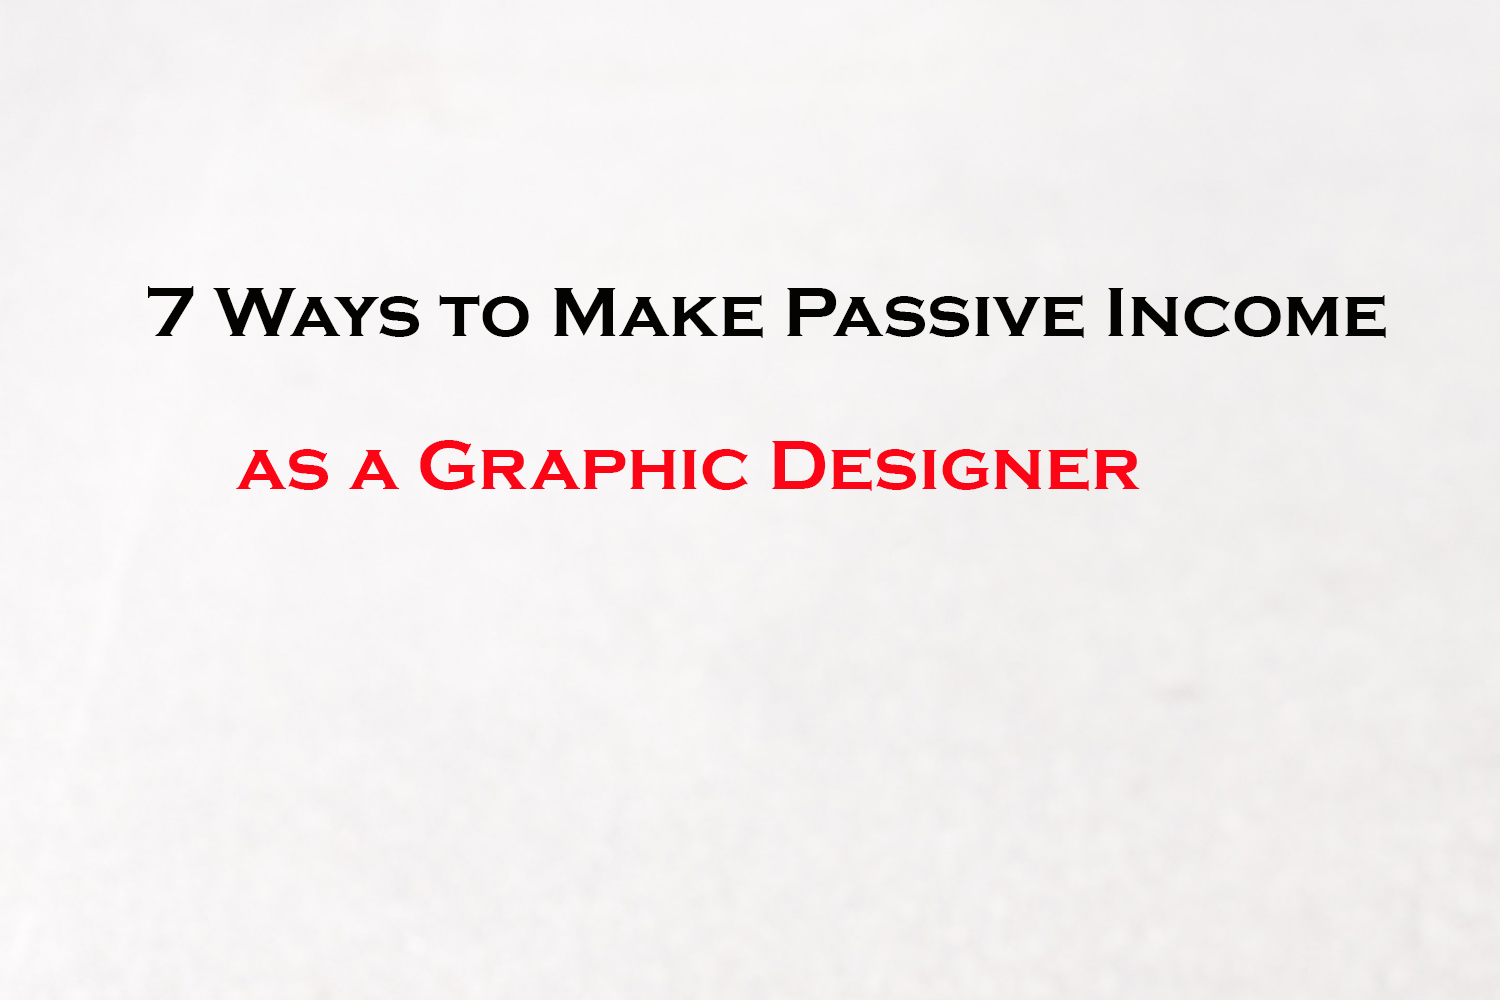 7 Ways to Make Passive Income as a Graphic Designer